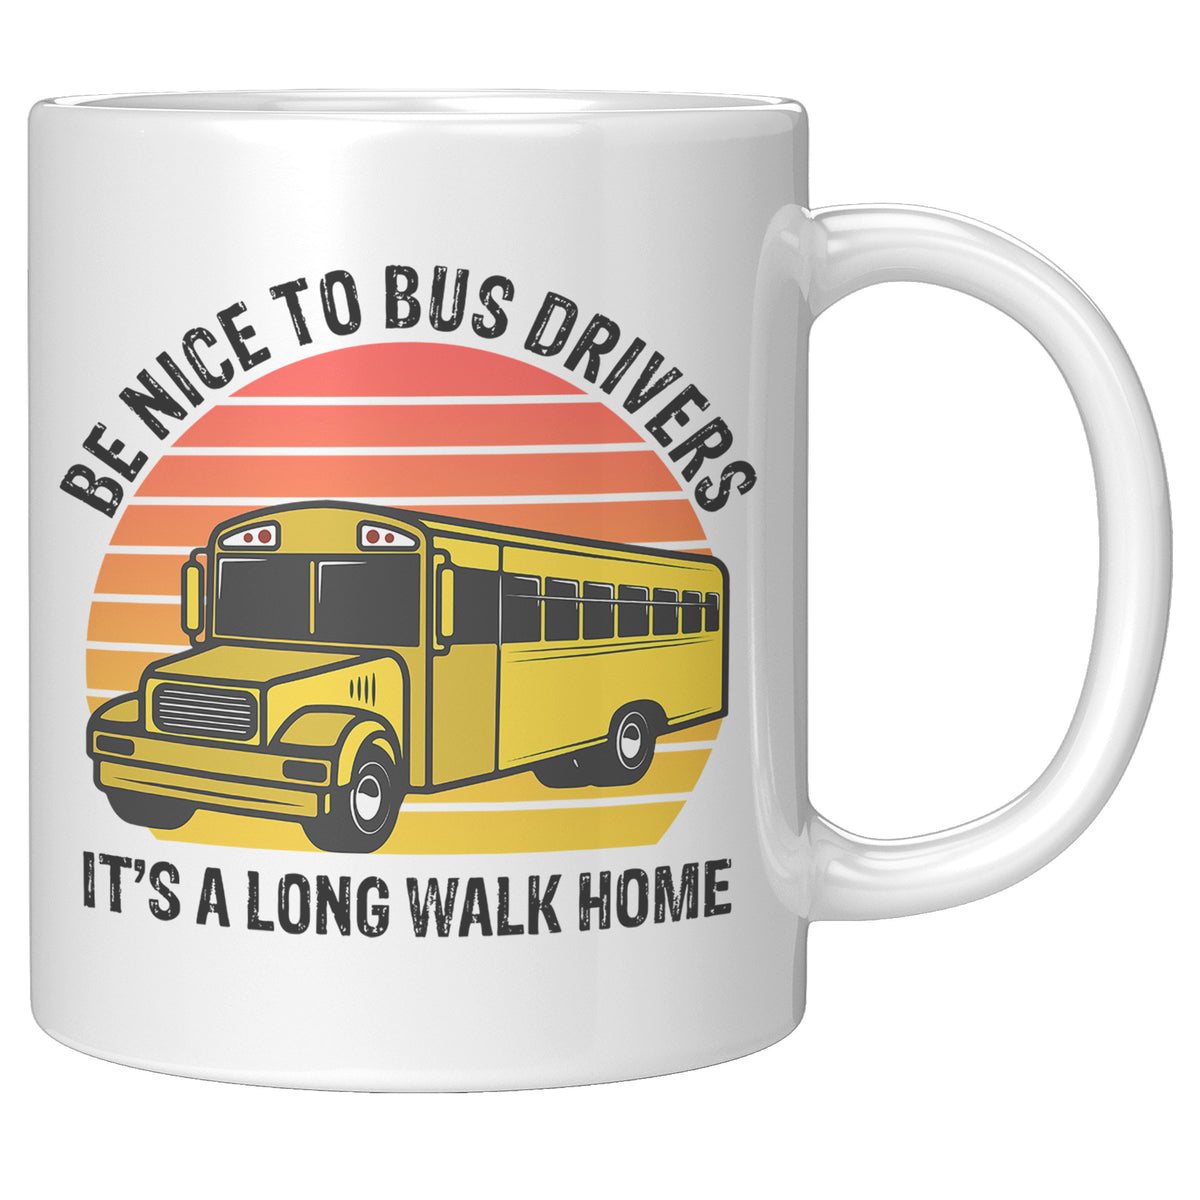 Bus Driver Mug - Be Nice to Bus Drivers